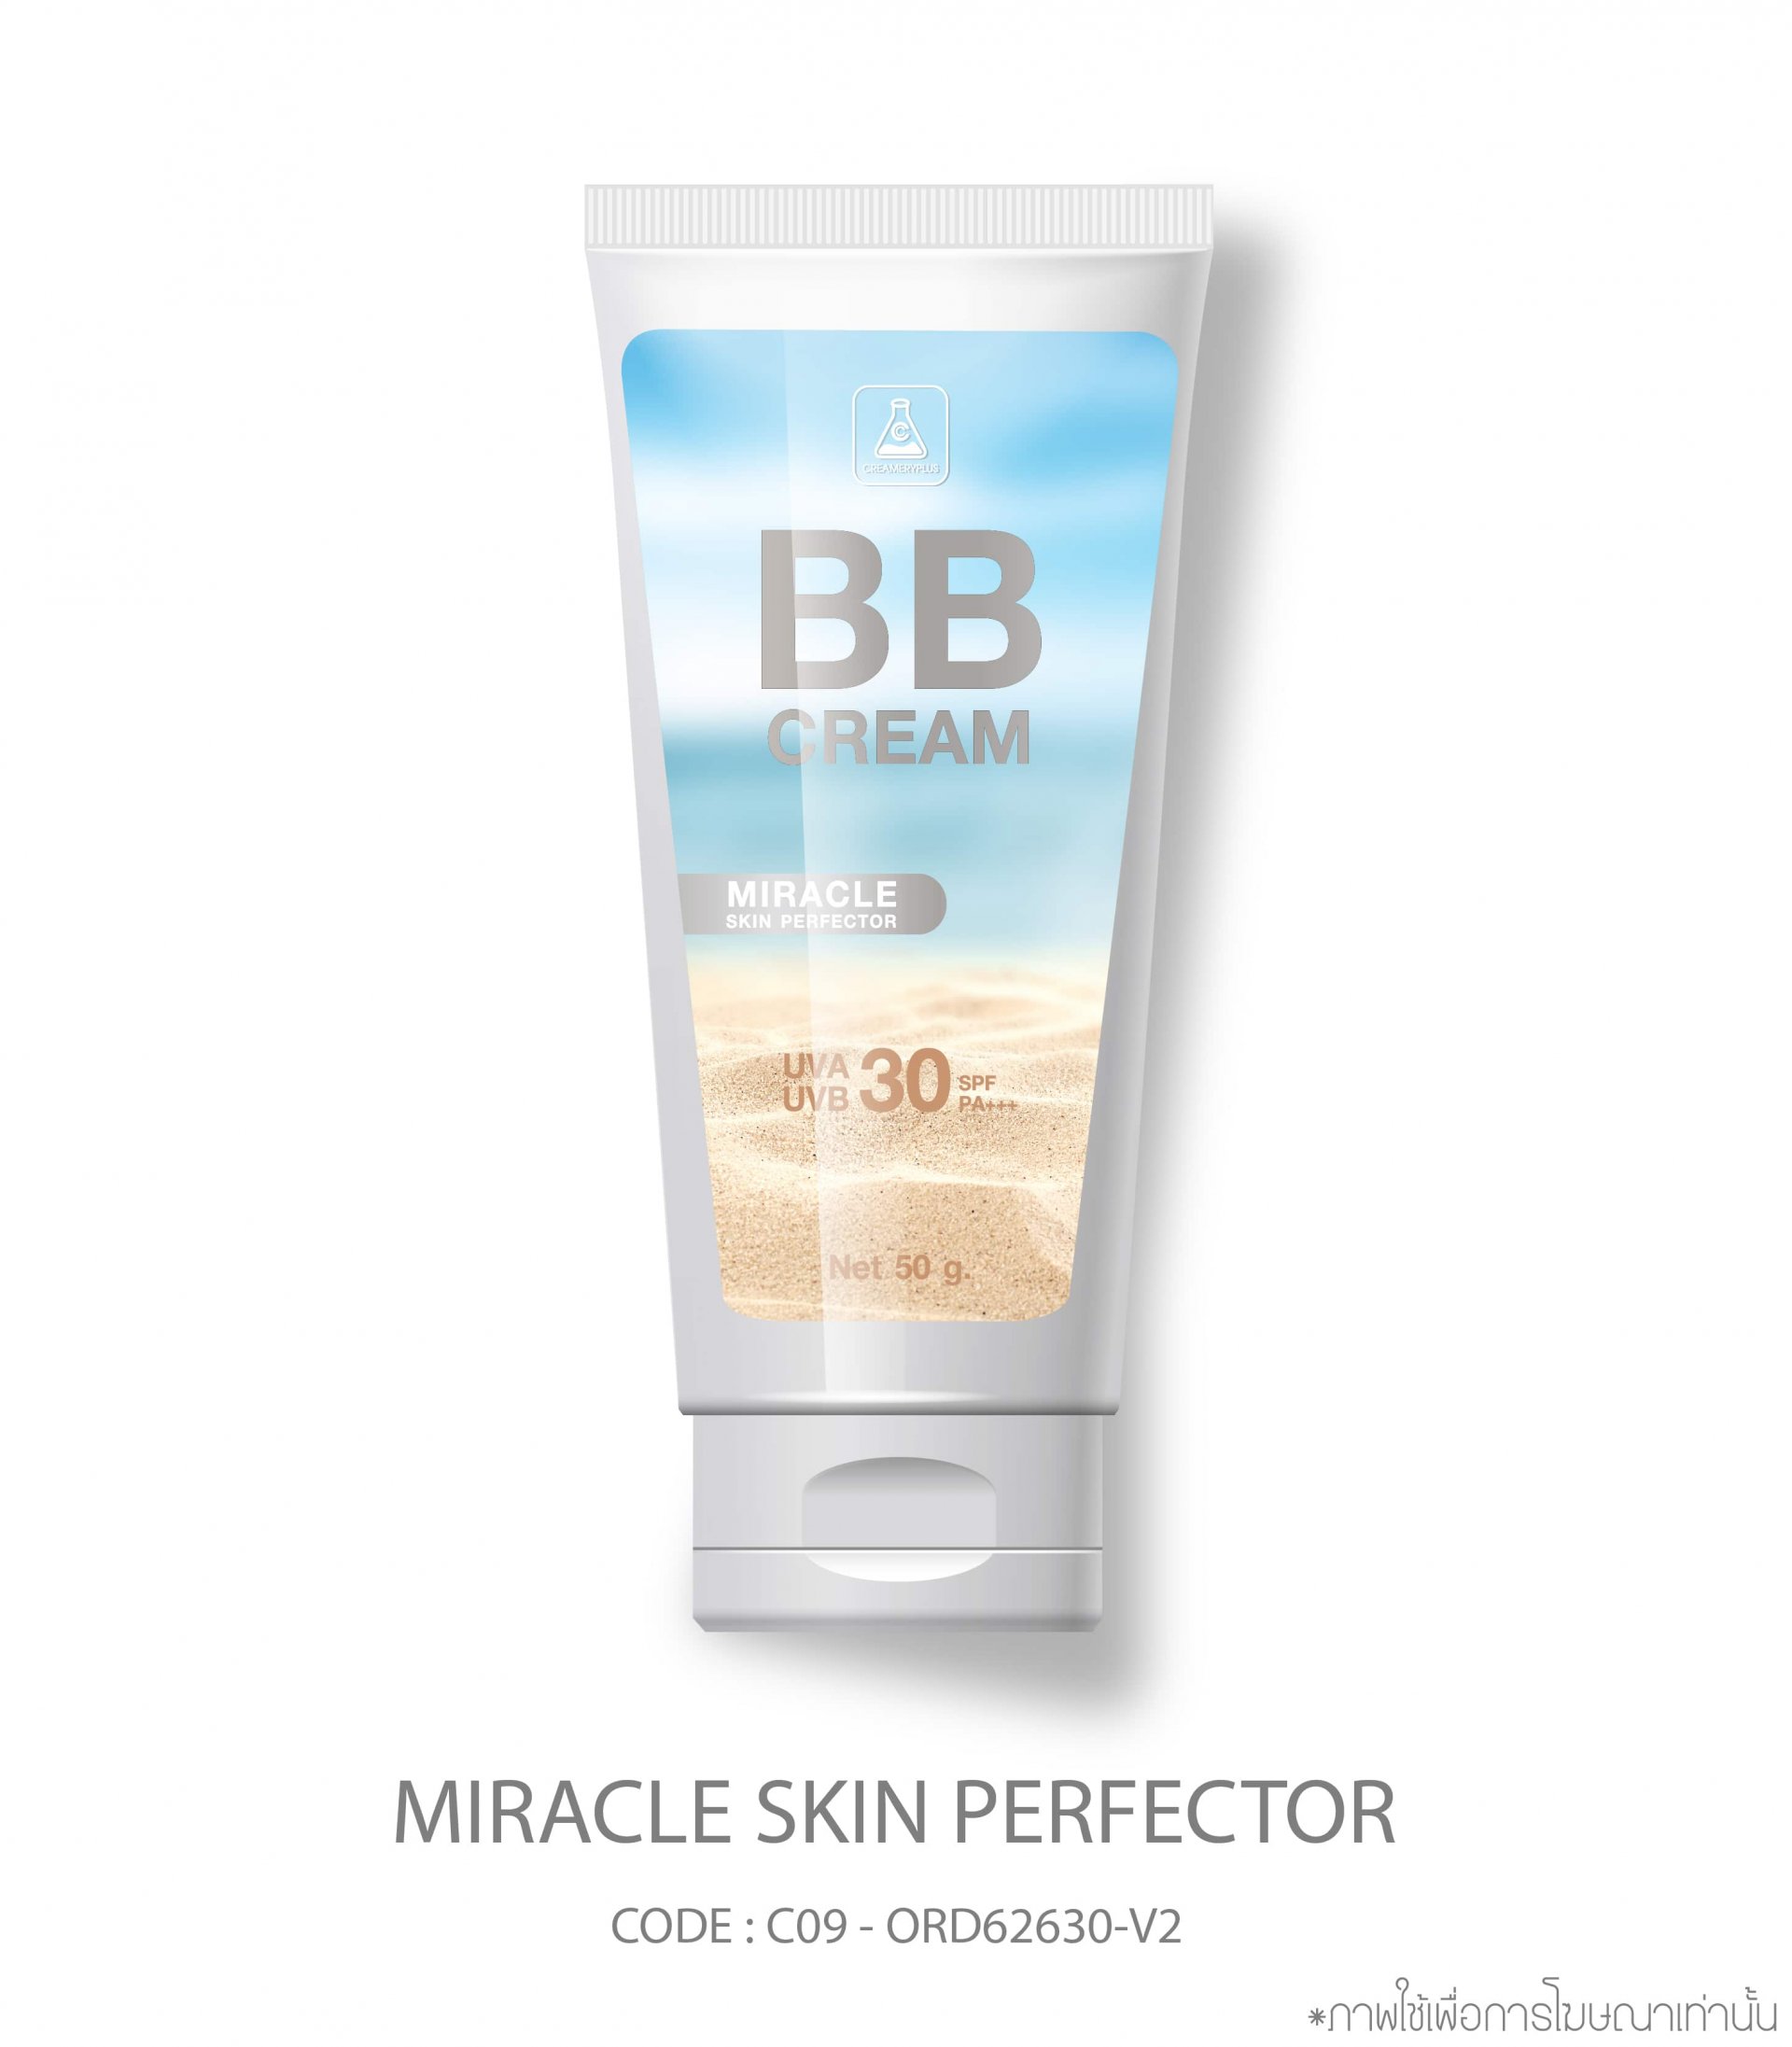 Miracle skin Perfector BB cream